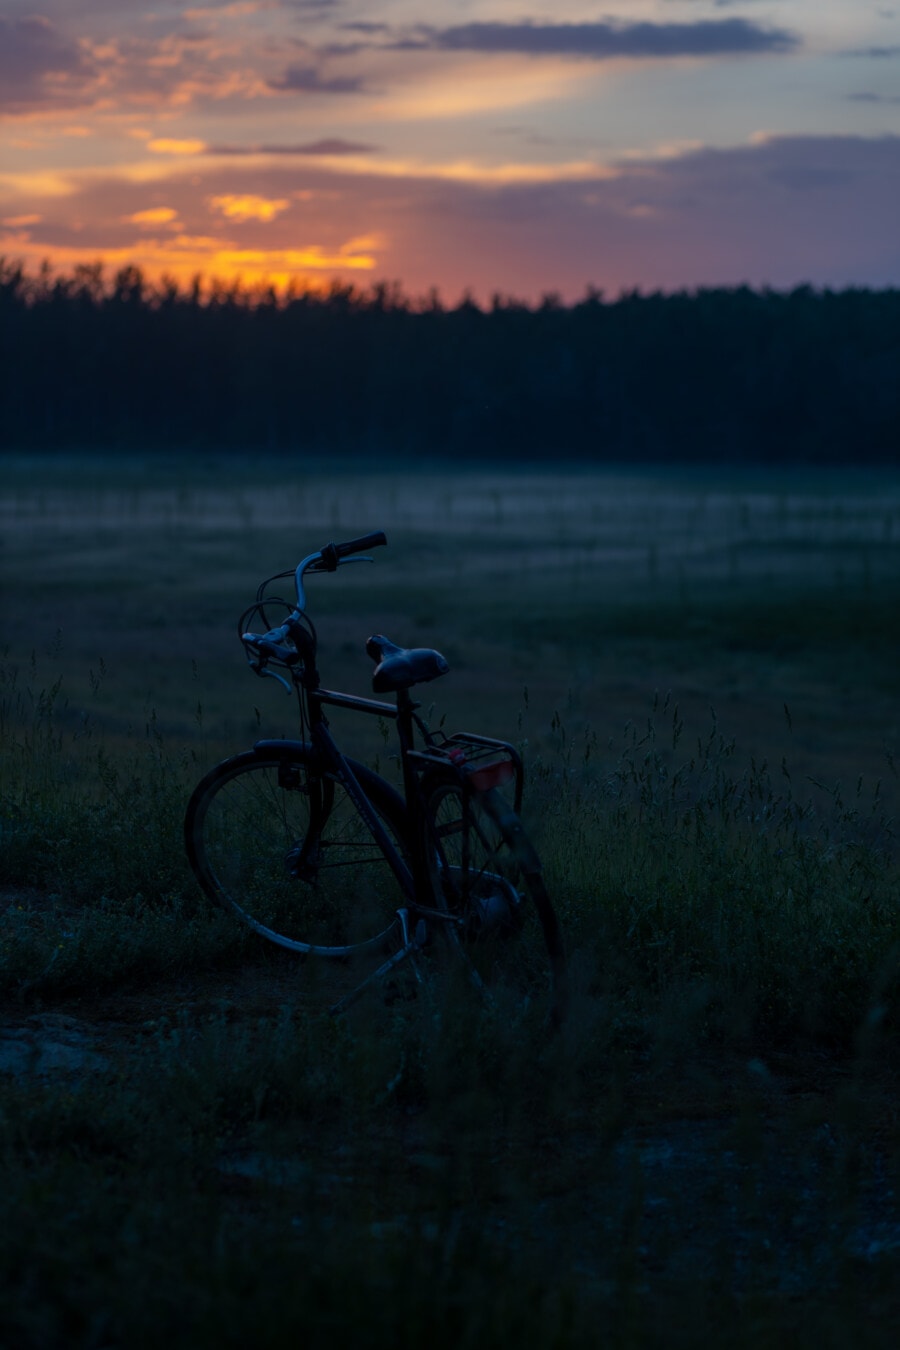 sunrise, silhouette, shadow, bicycle, morning, foggy, countryside, wheel, dawn, vehicle